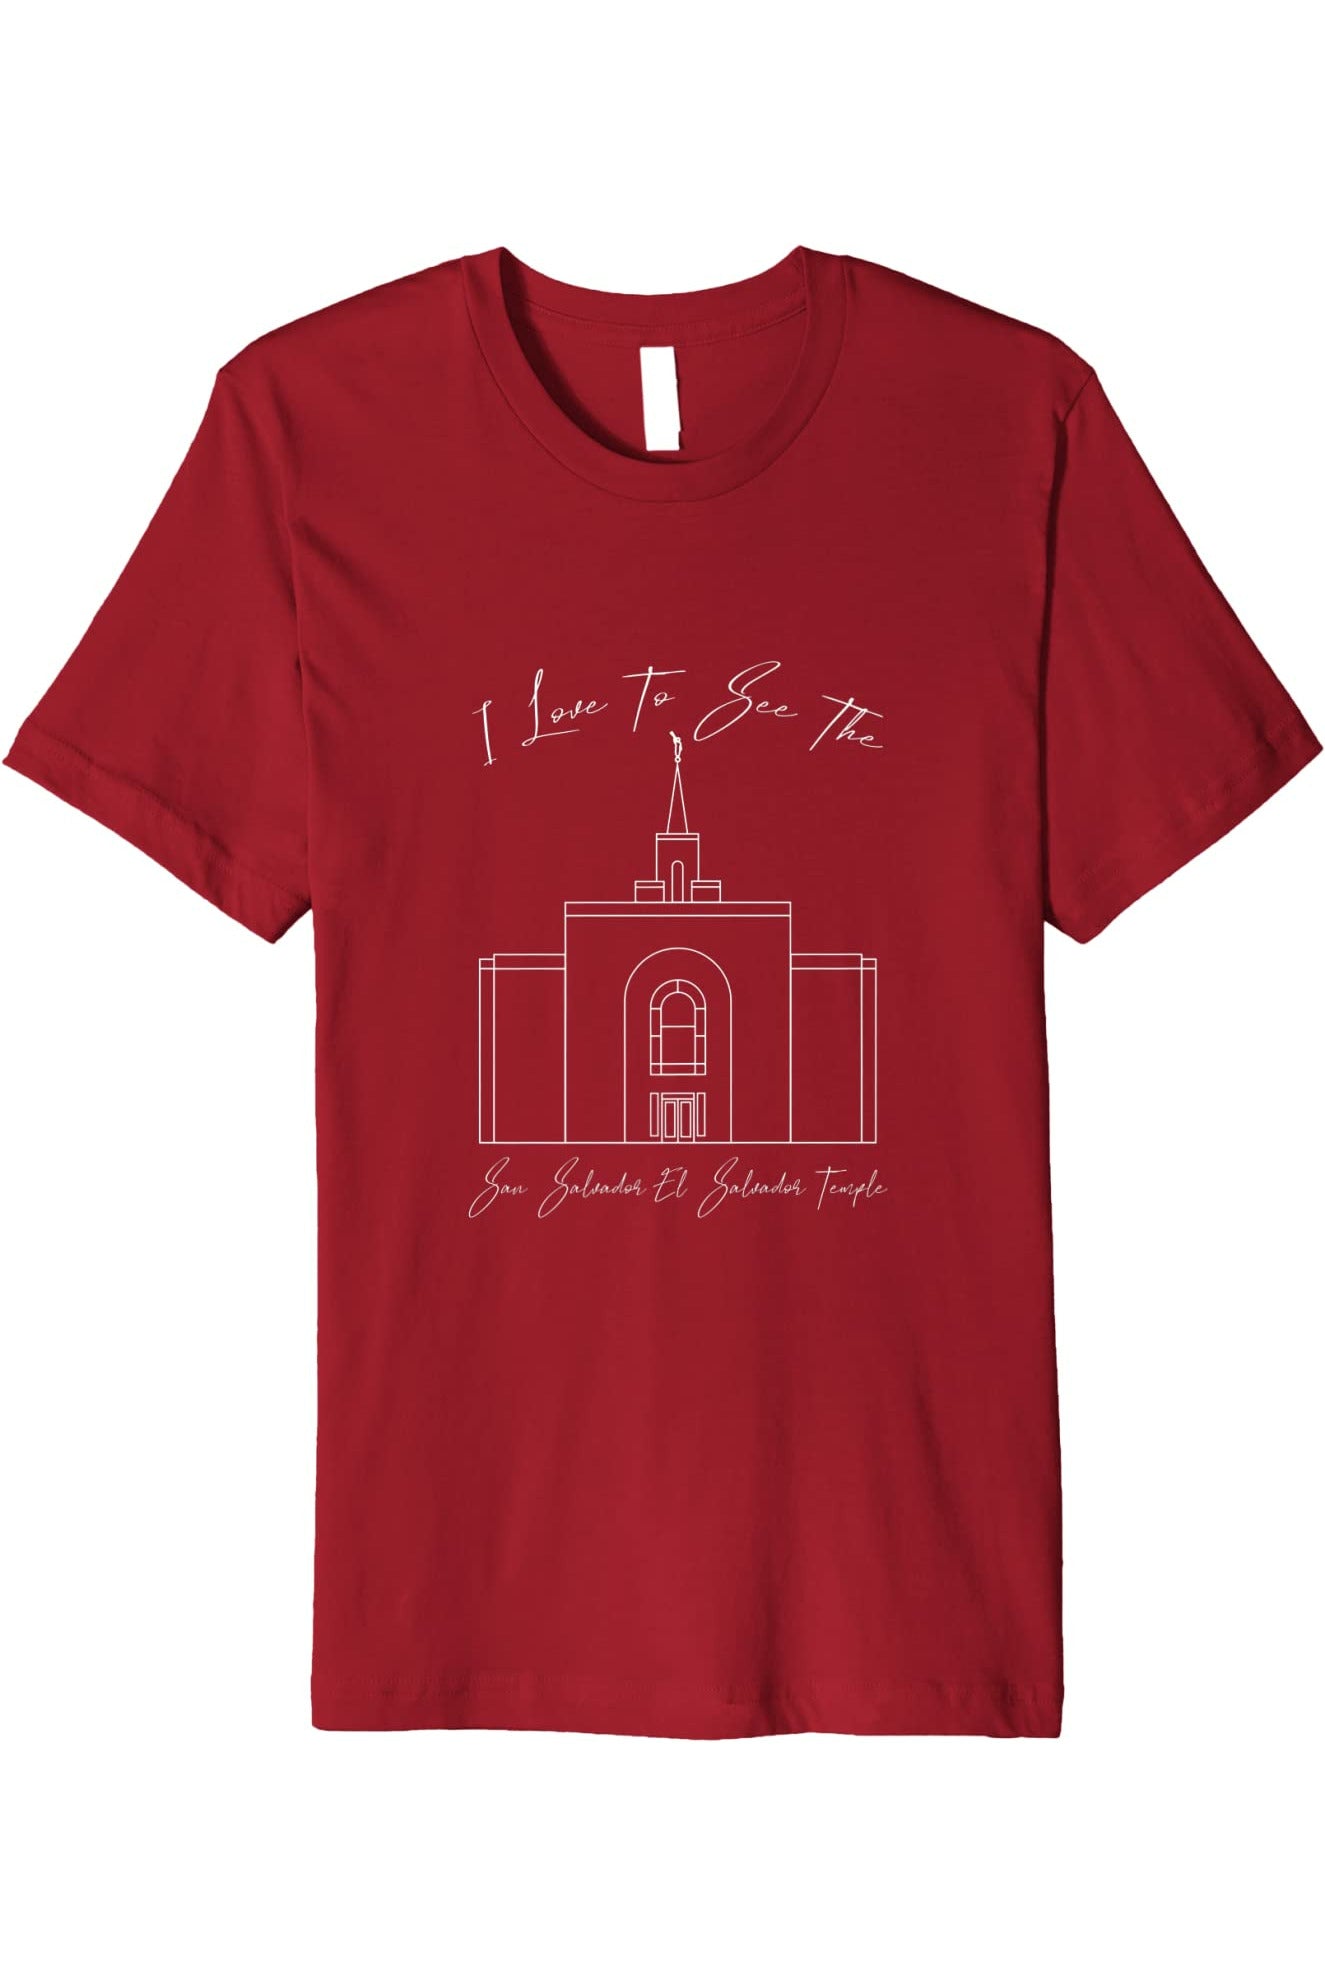 San Salvador El Salvador Temple T-Shirt - Premium - Calligraphy Style (English) US